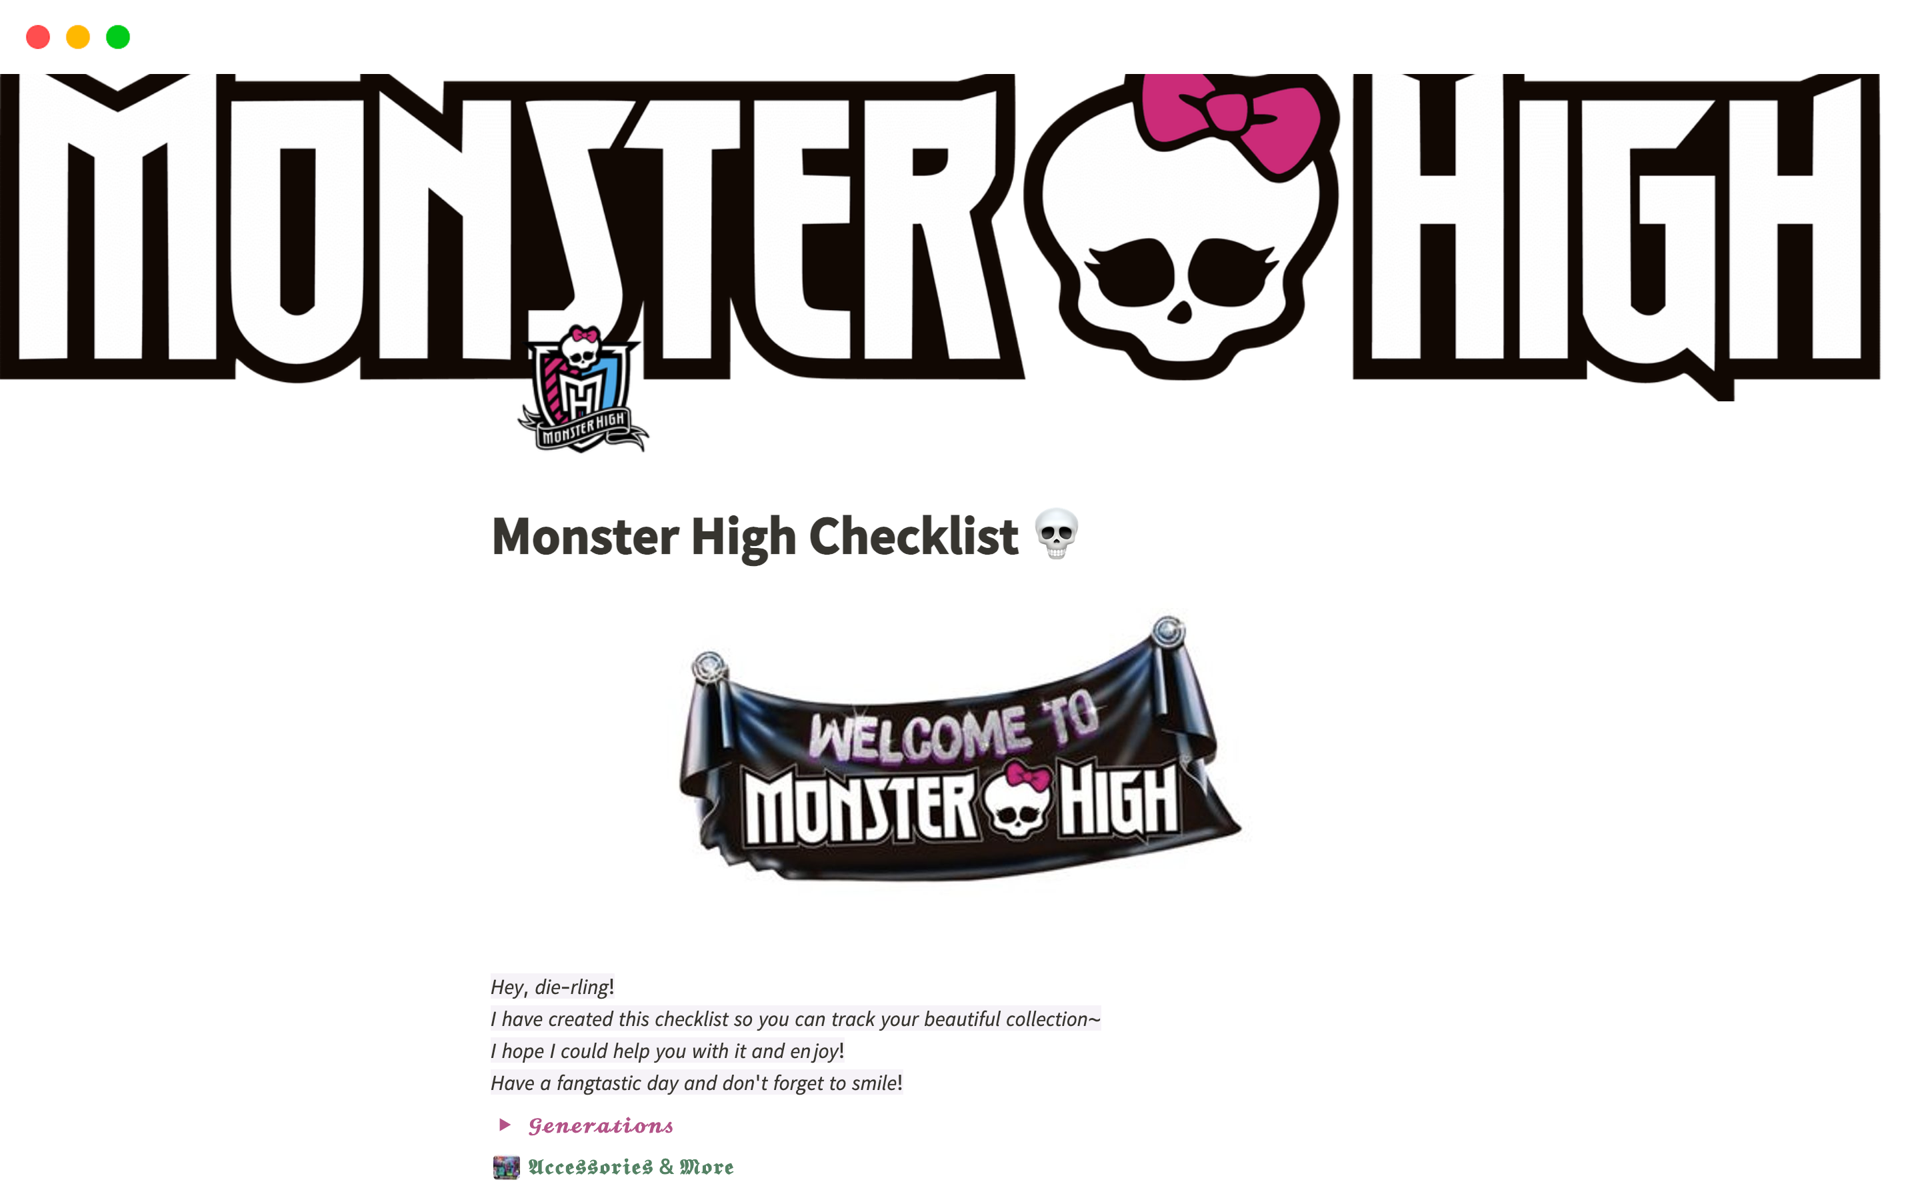 Monster High Checklist님의 템플릿 미리보기